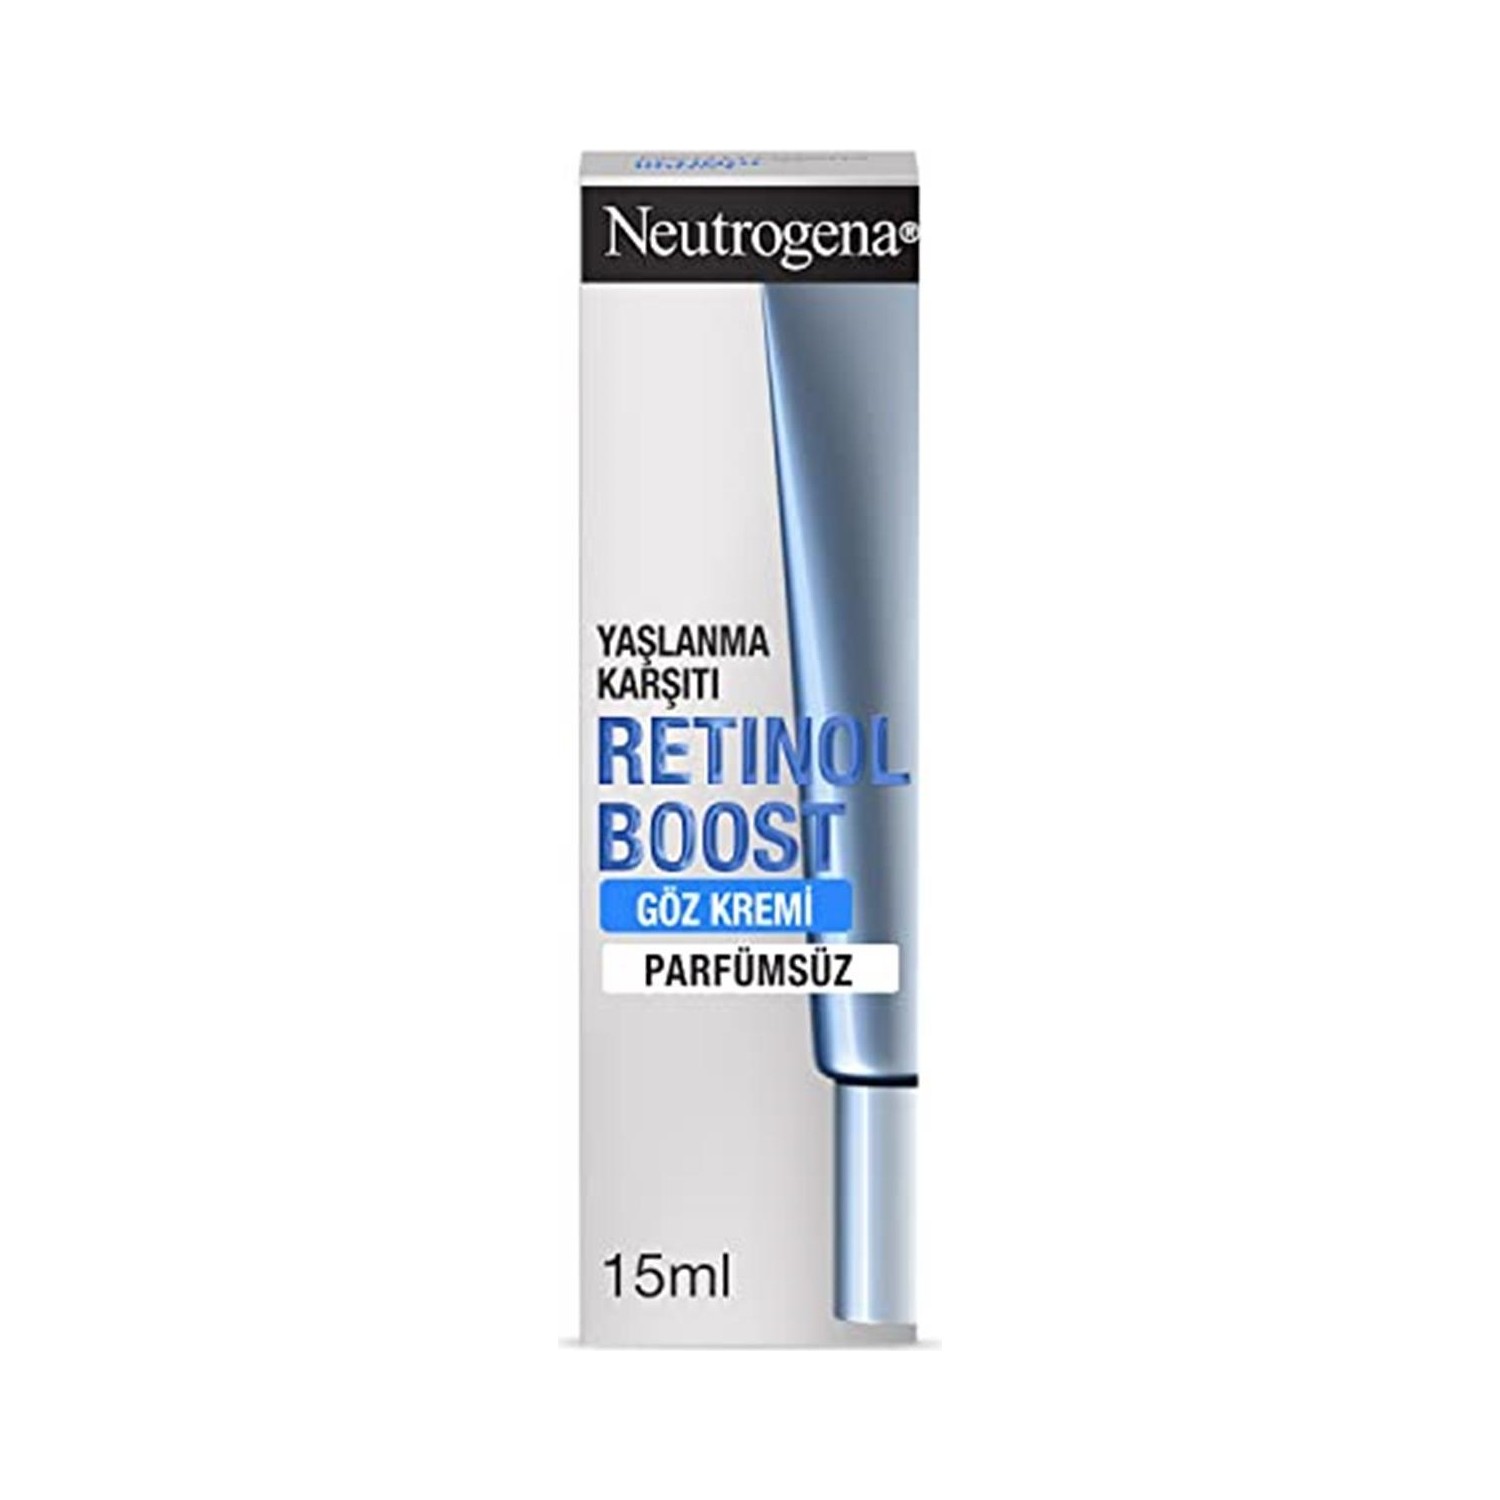 Крем для кожи вокруг глаз Neutrogena Retinol Boost, 15 мл крем для кожи вокруг глаз neutrogena retinol boost 15 мл